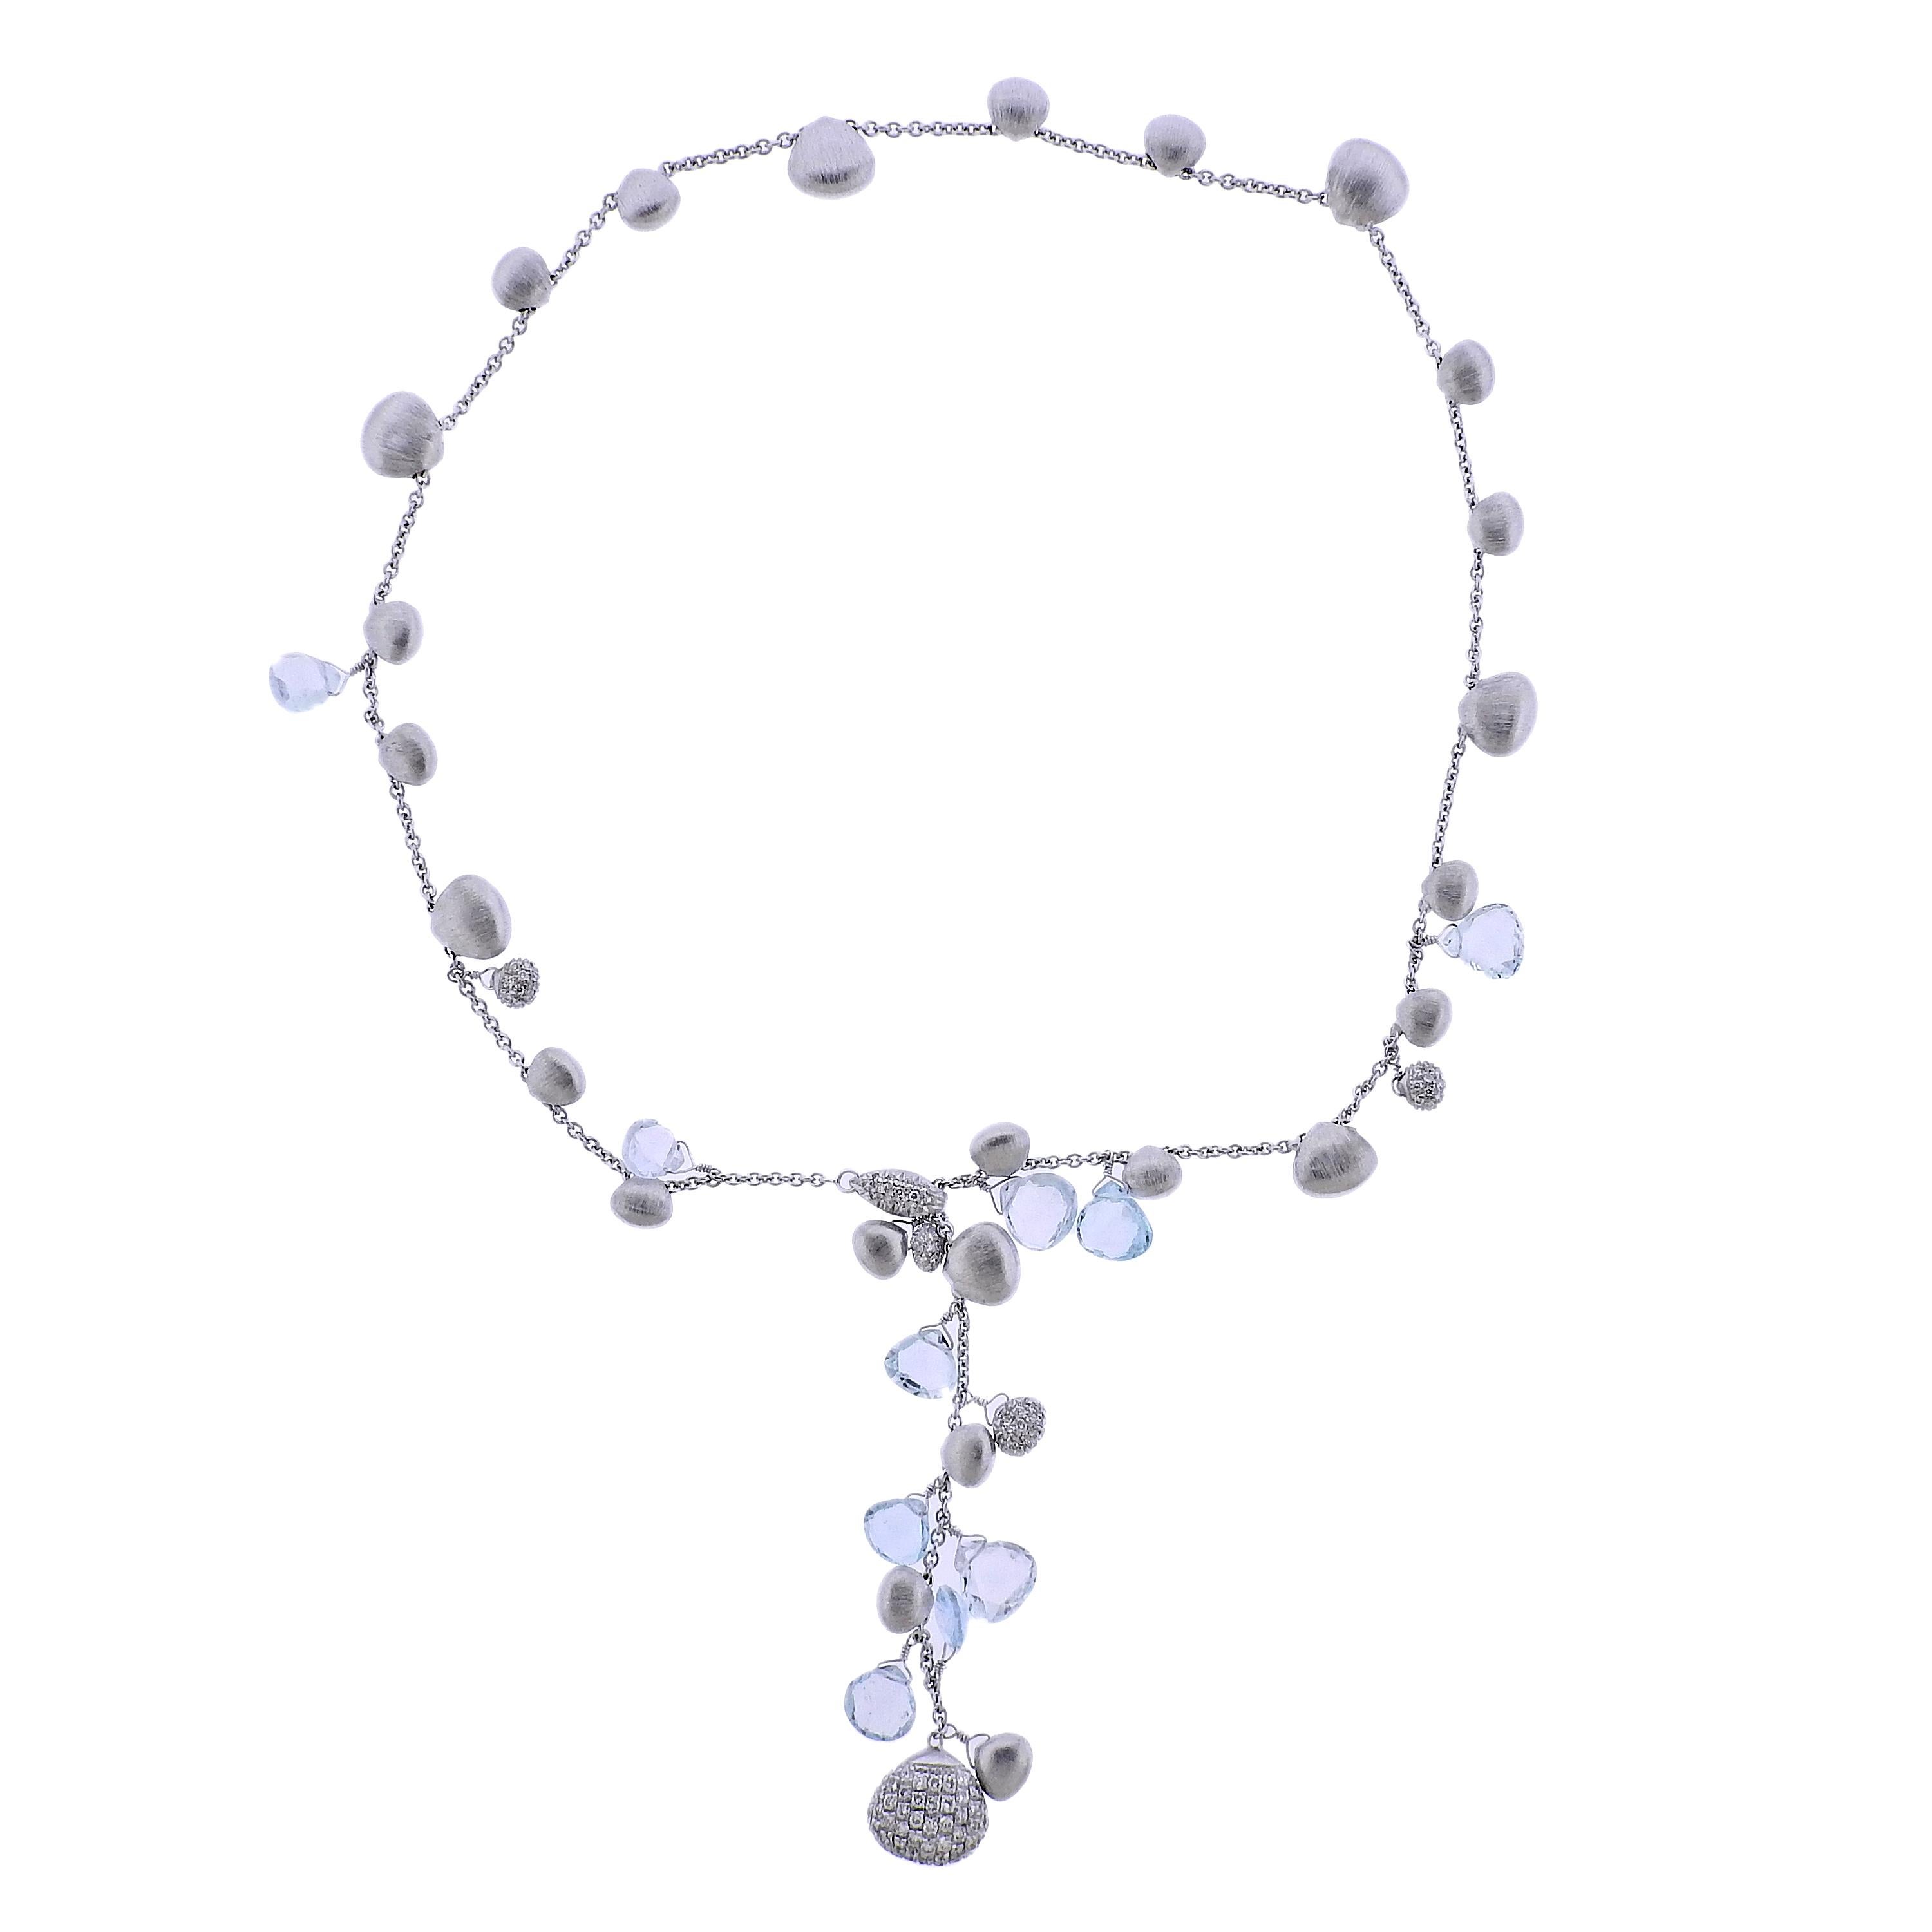 Marco Bicego Siviglia collection 18K white gold aquamarine diamond pendant necklace. Necklace measures 18.5